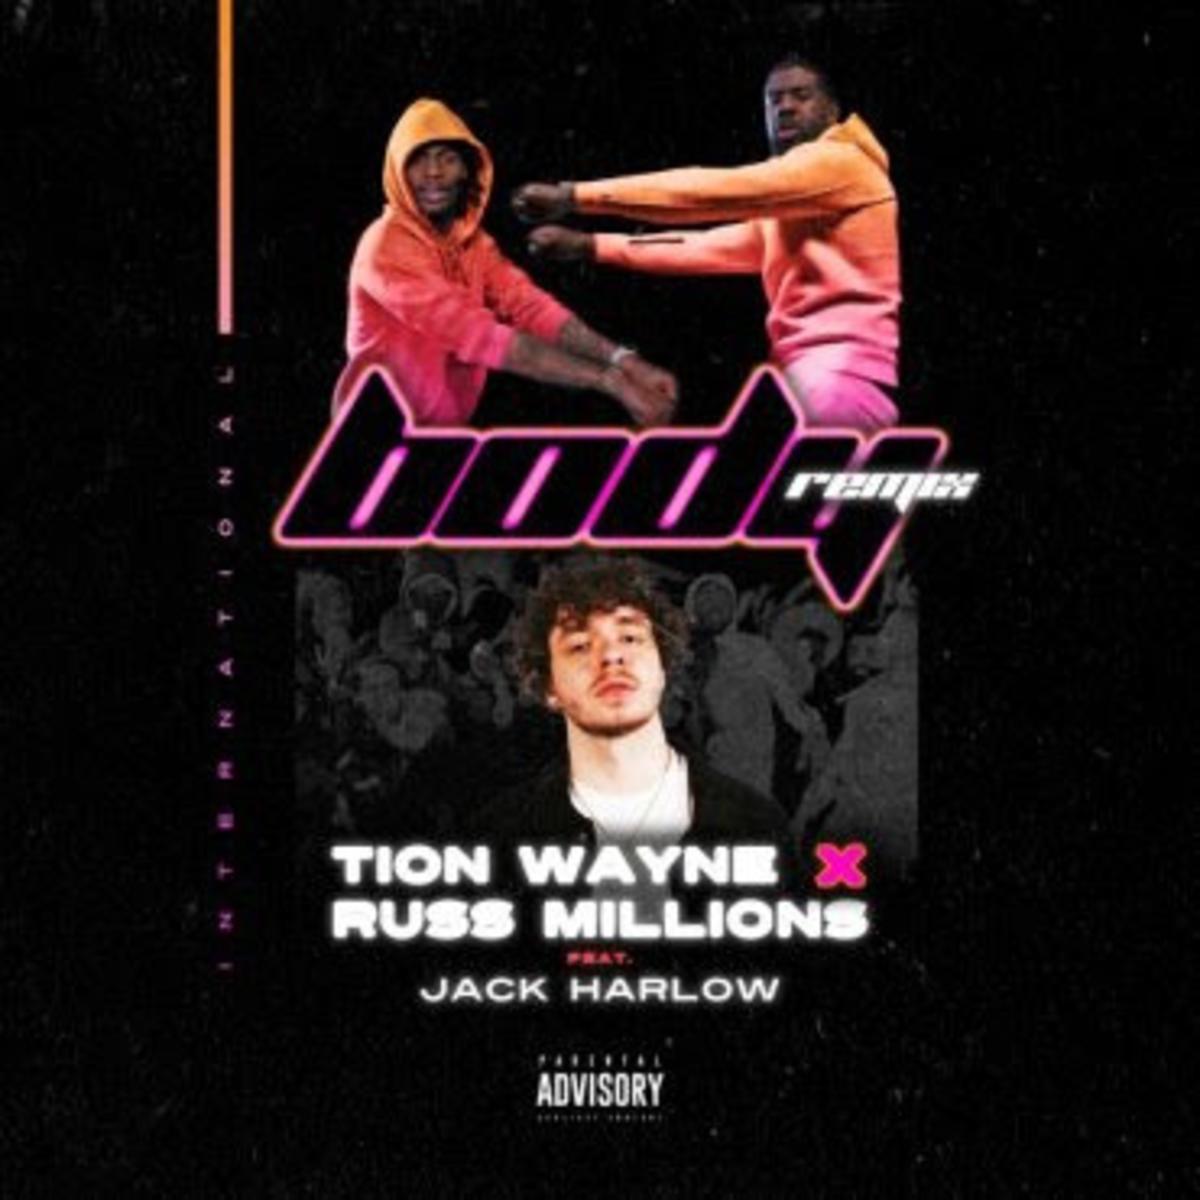 Tion Wayne & Russ Millions Body (remix)